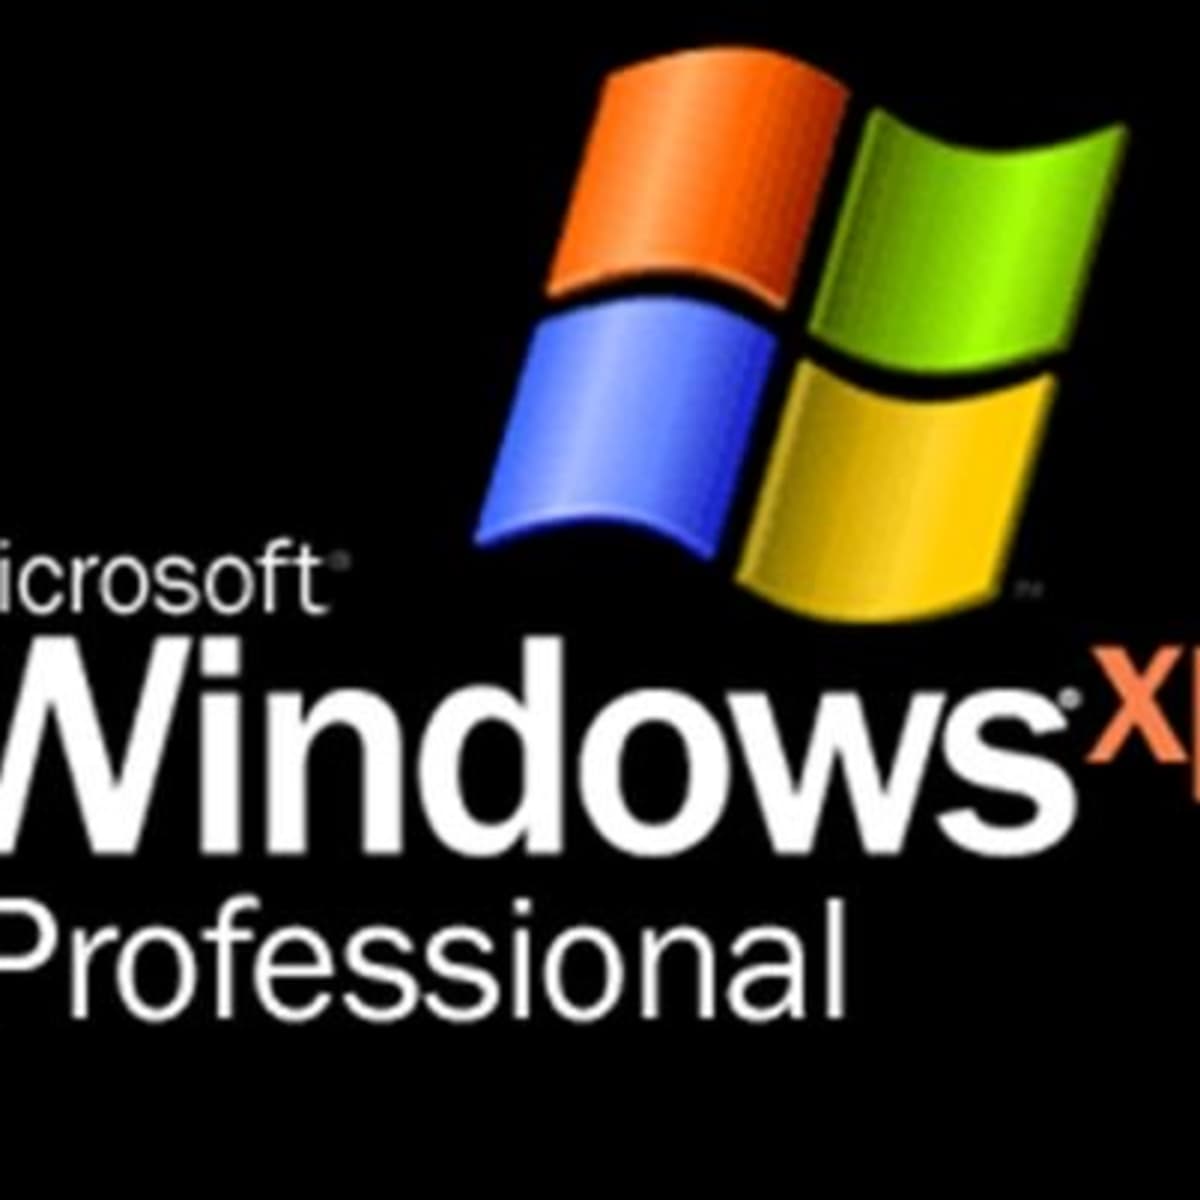 malwarebytes anti malware free for windows xp pro